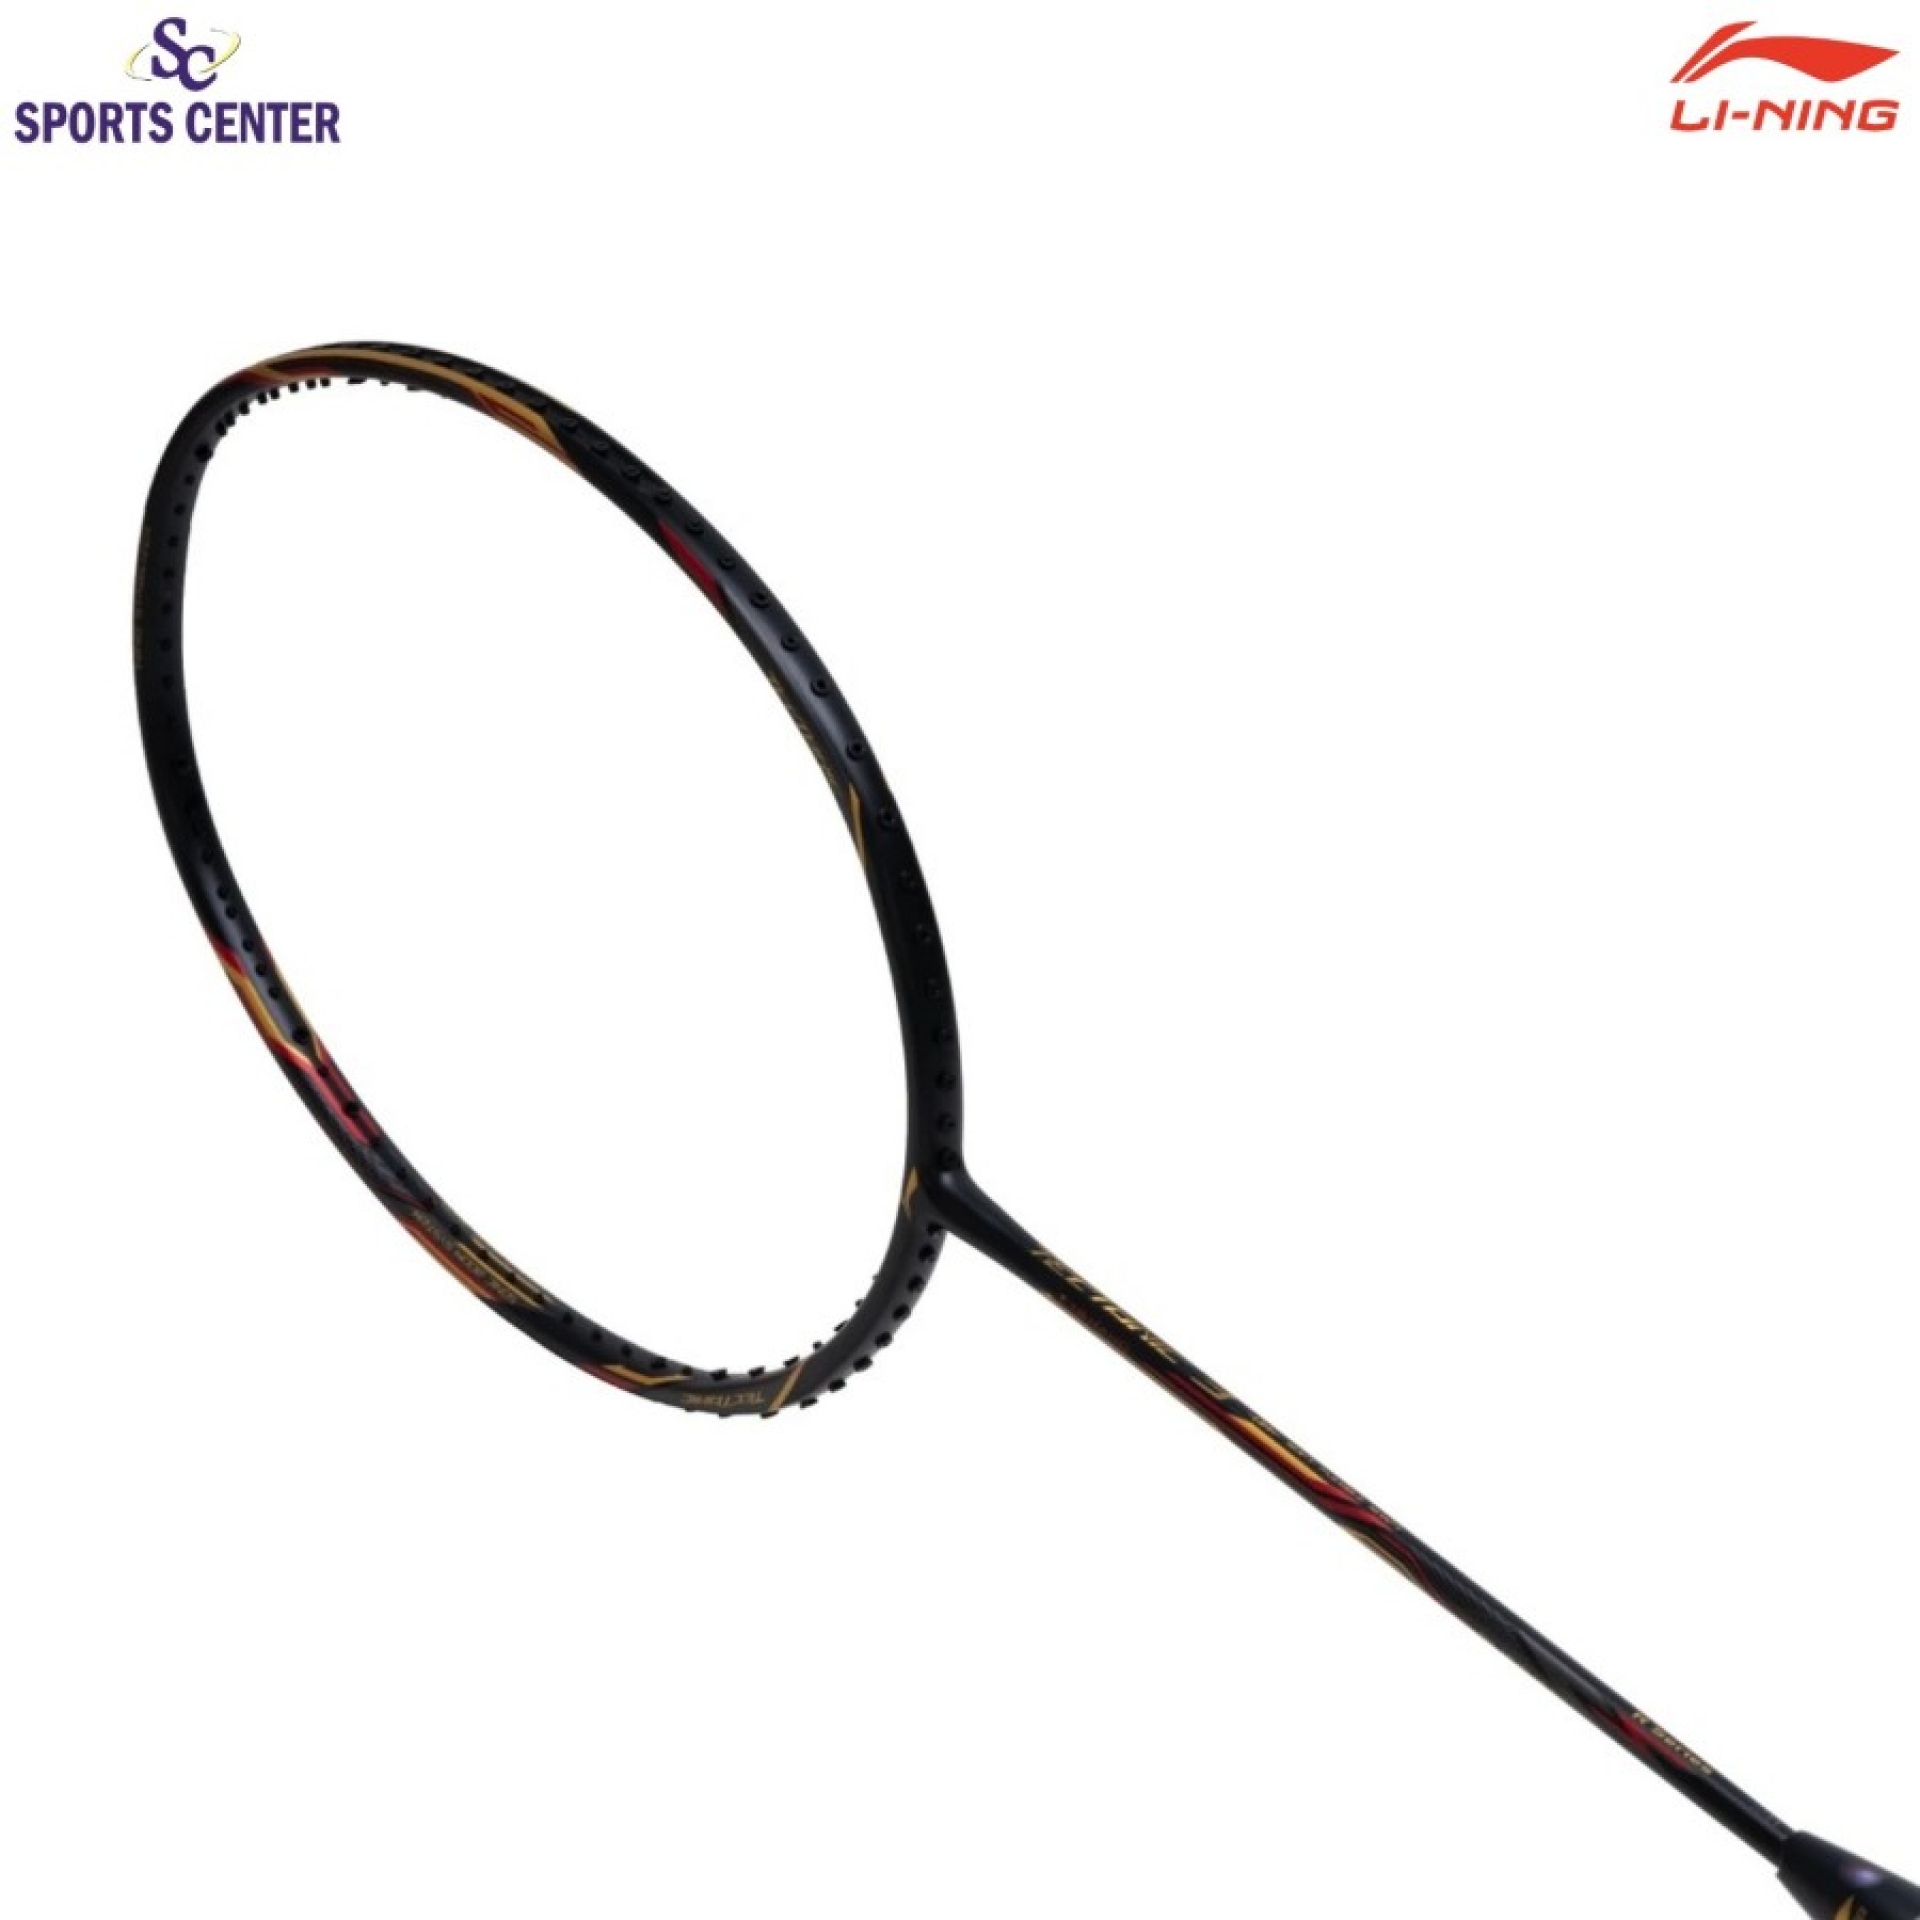 New Raket Badminton Lining Tectonic 3R 4U - White/Gold/Blue | Sports Center